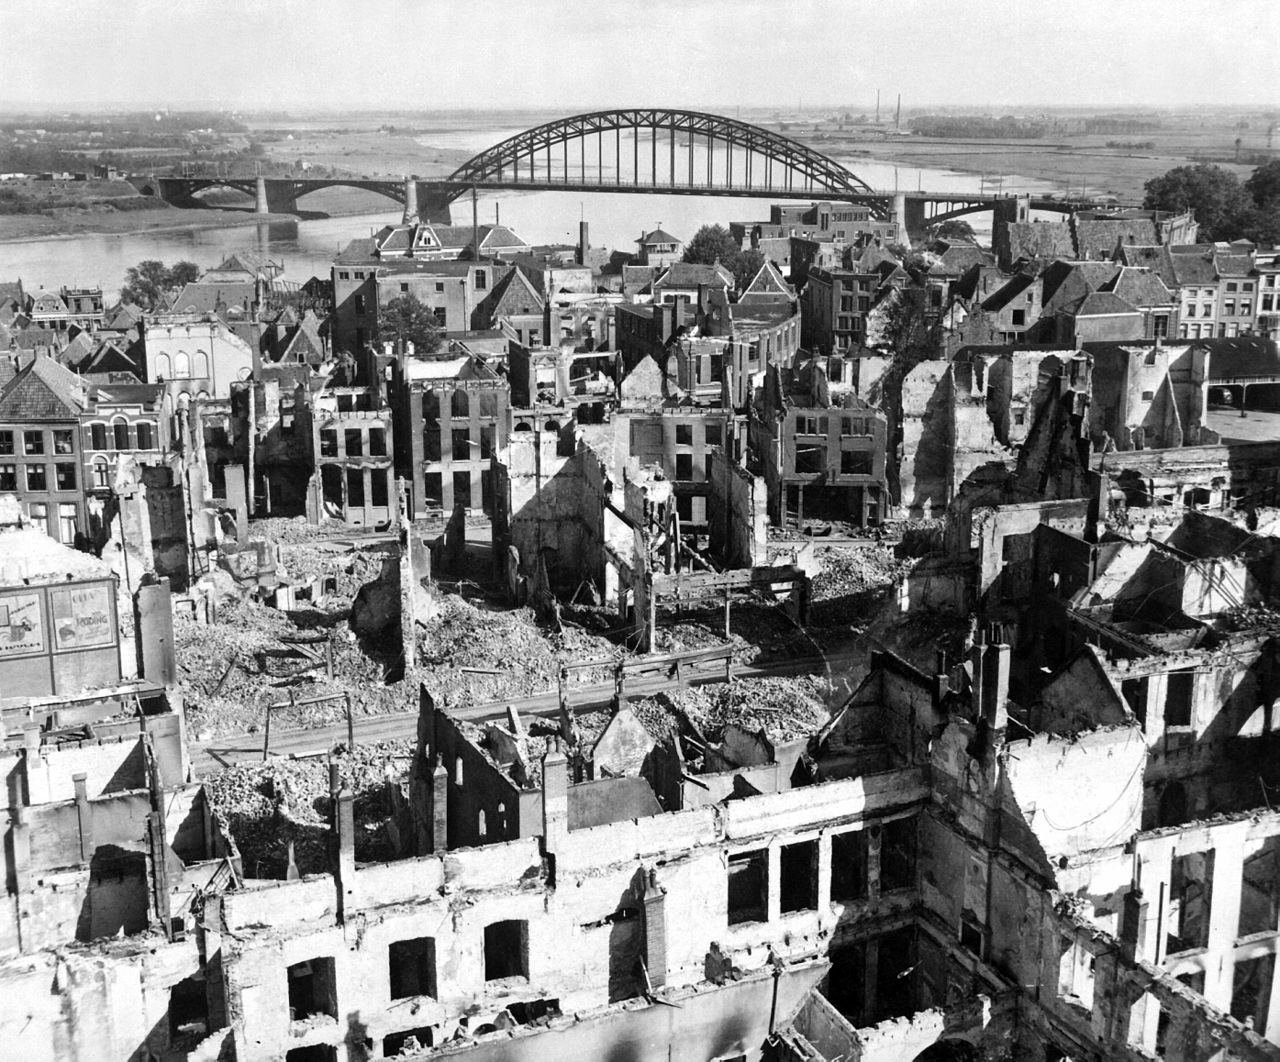 Nijmegen destroyed after the mistaken bombing run